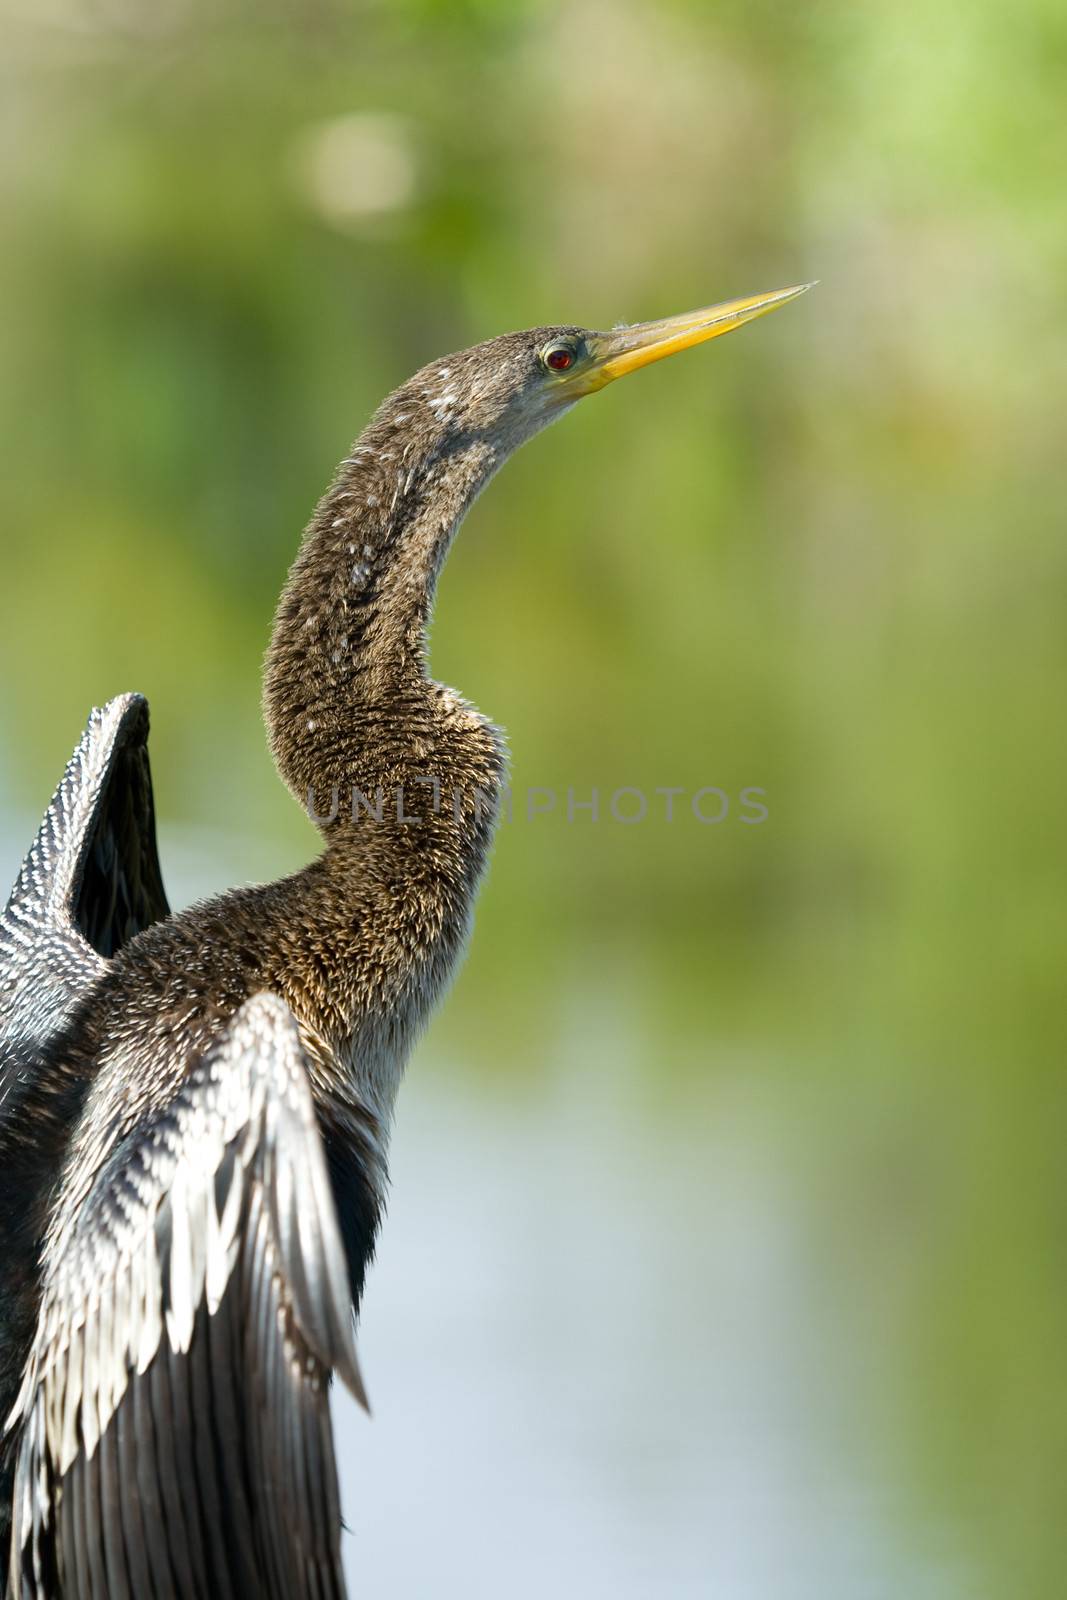 Anhinga Bird, Florida Everglades by CelsoDiniz